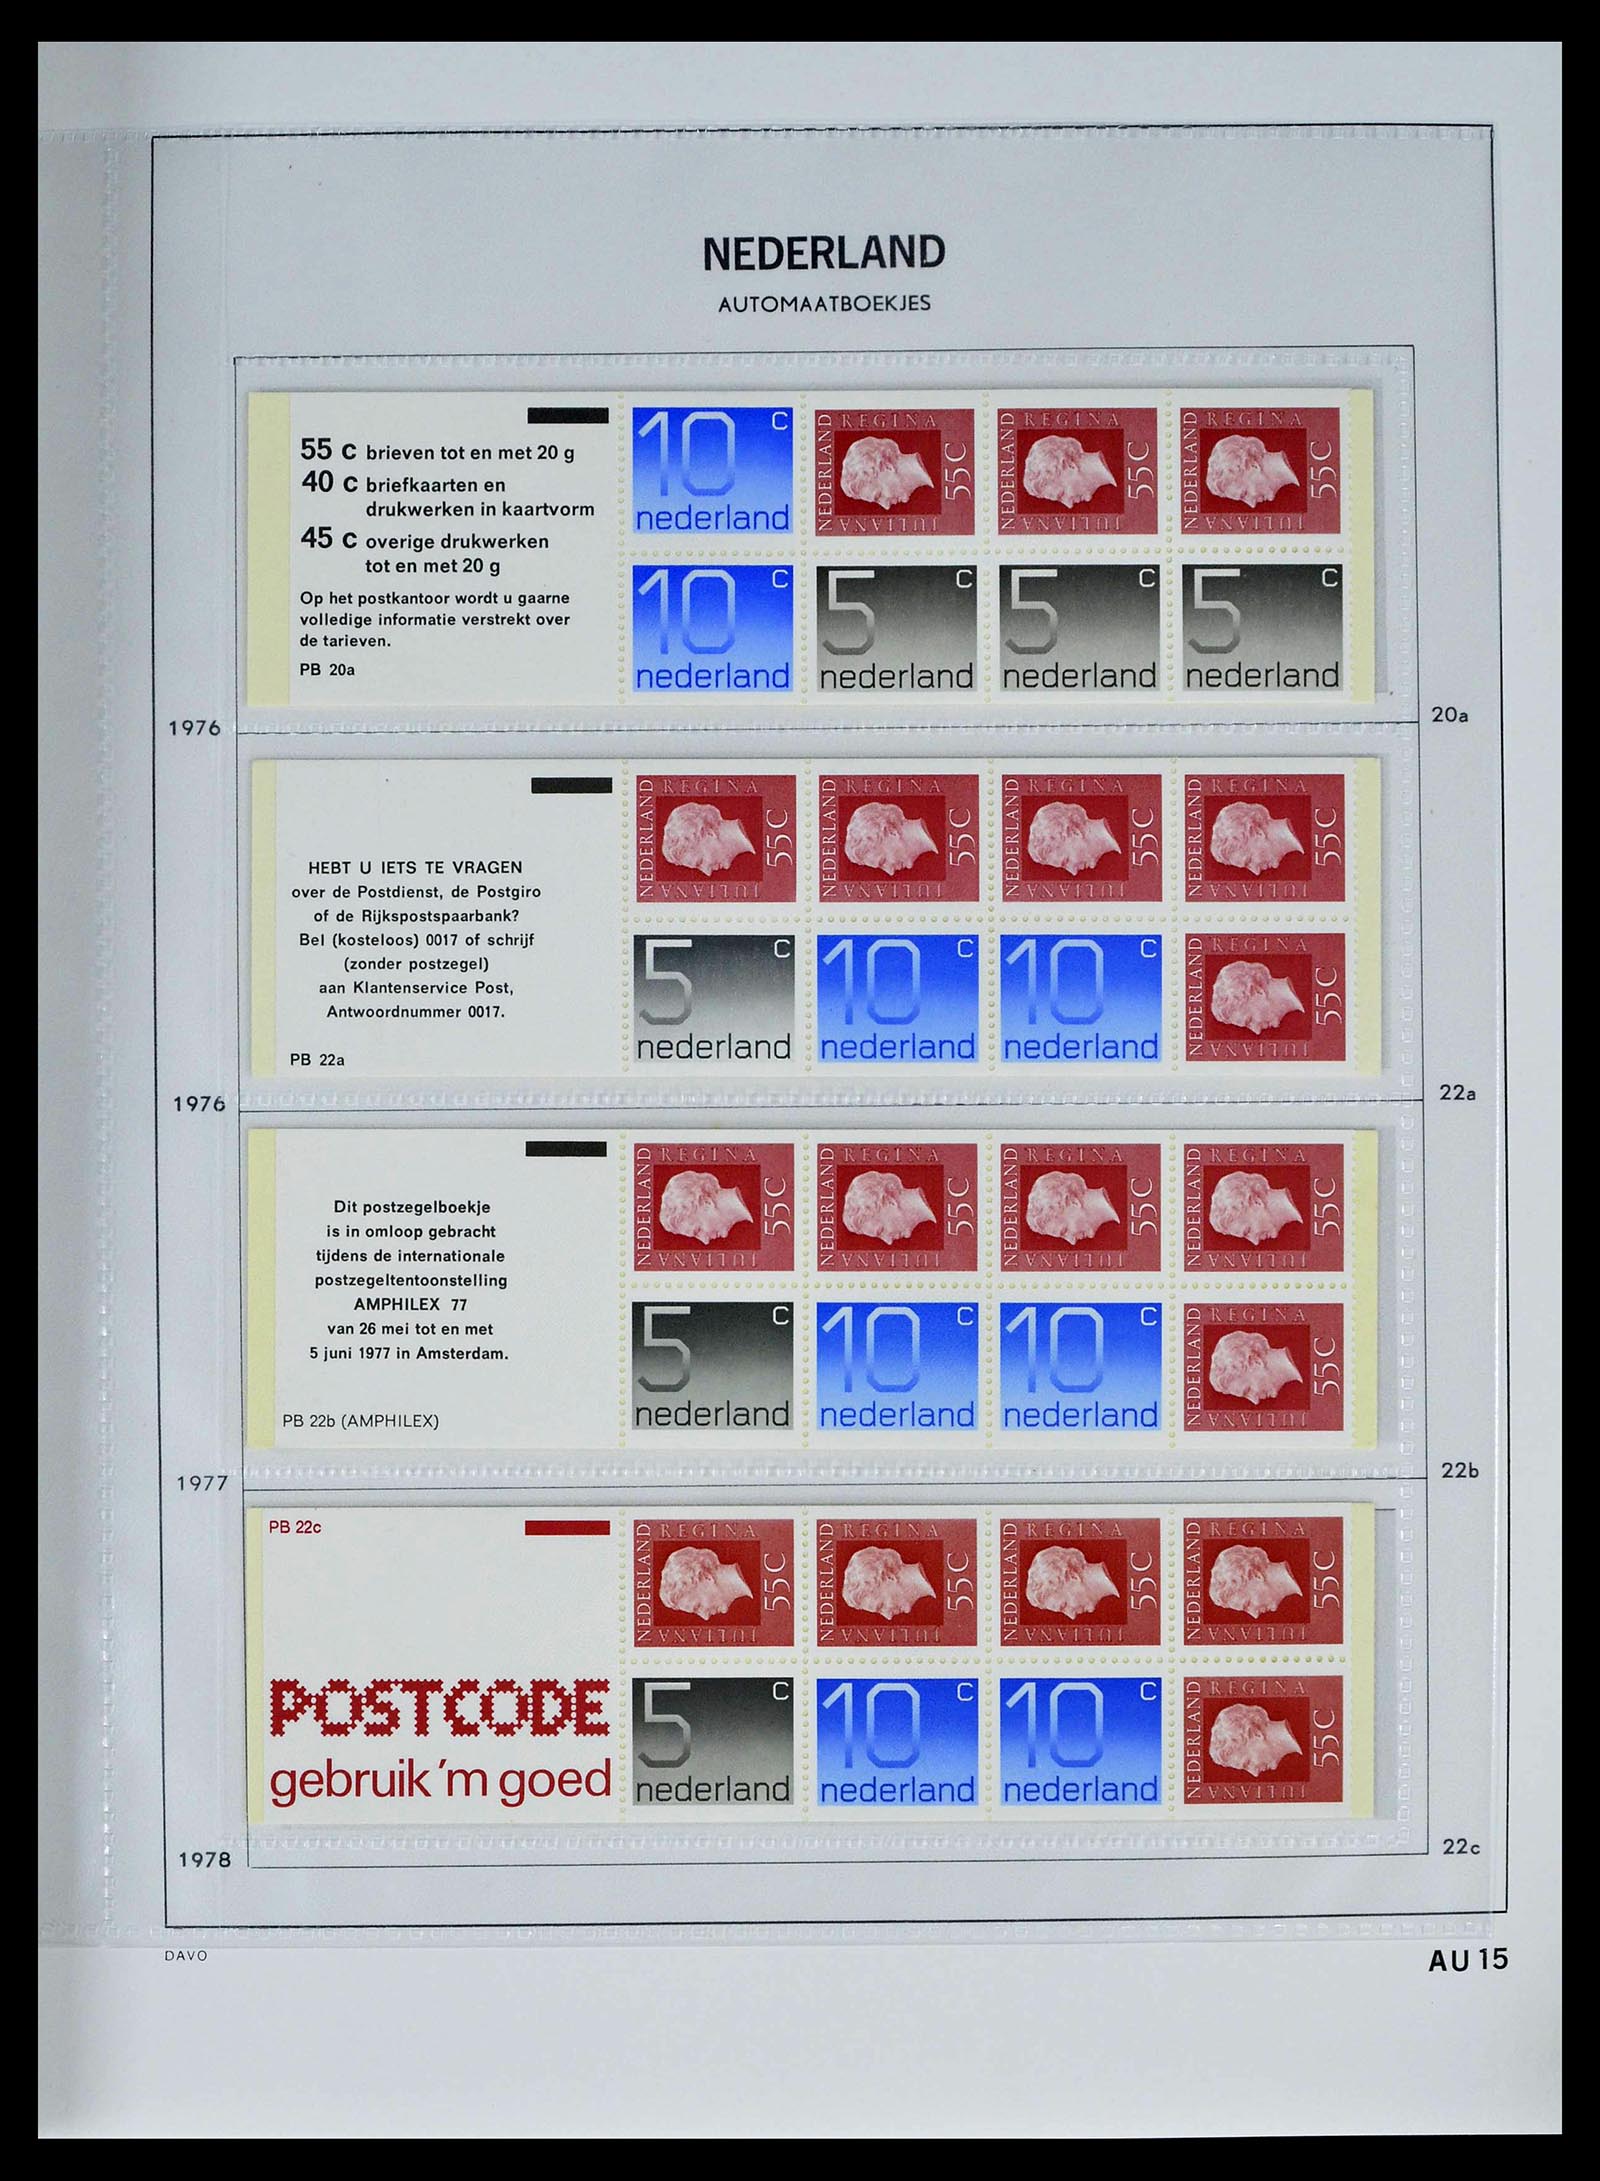 39362 0015 - Stamp collection 39362 Netherlands stamp booklets 1964-2003.